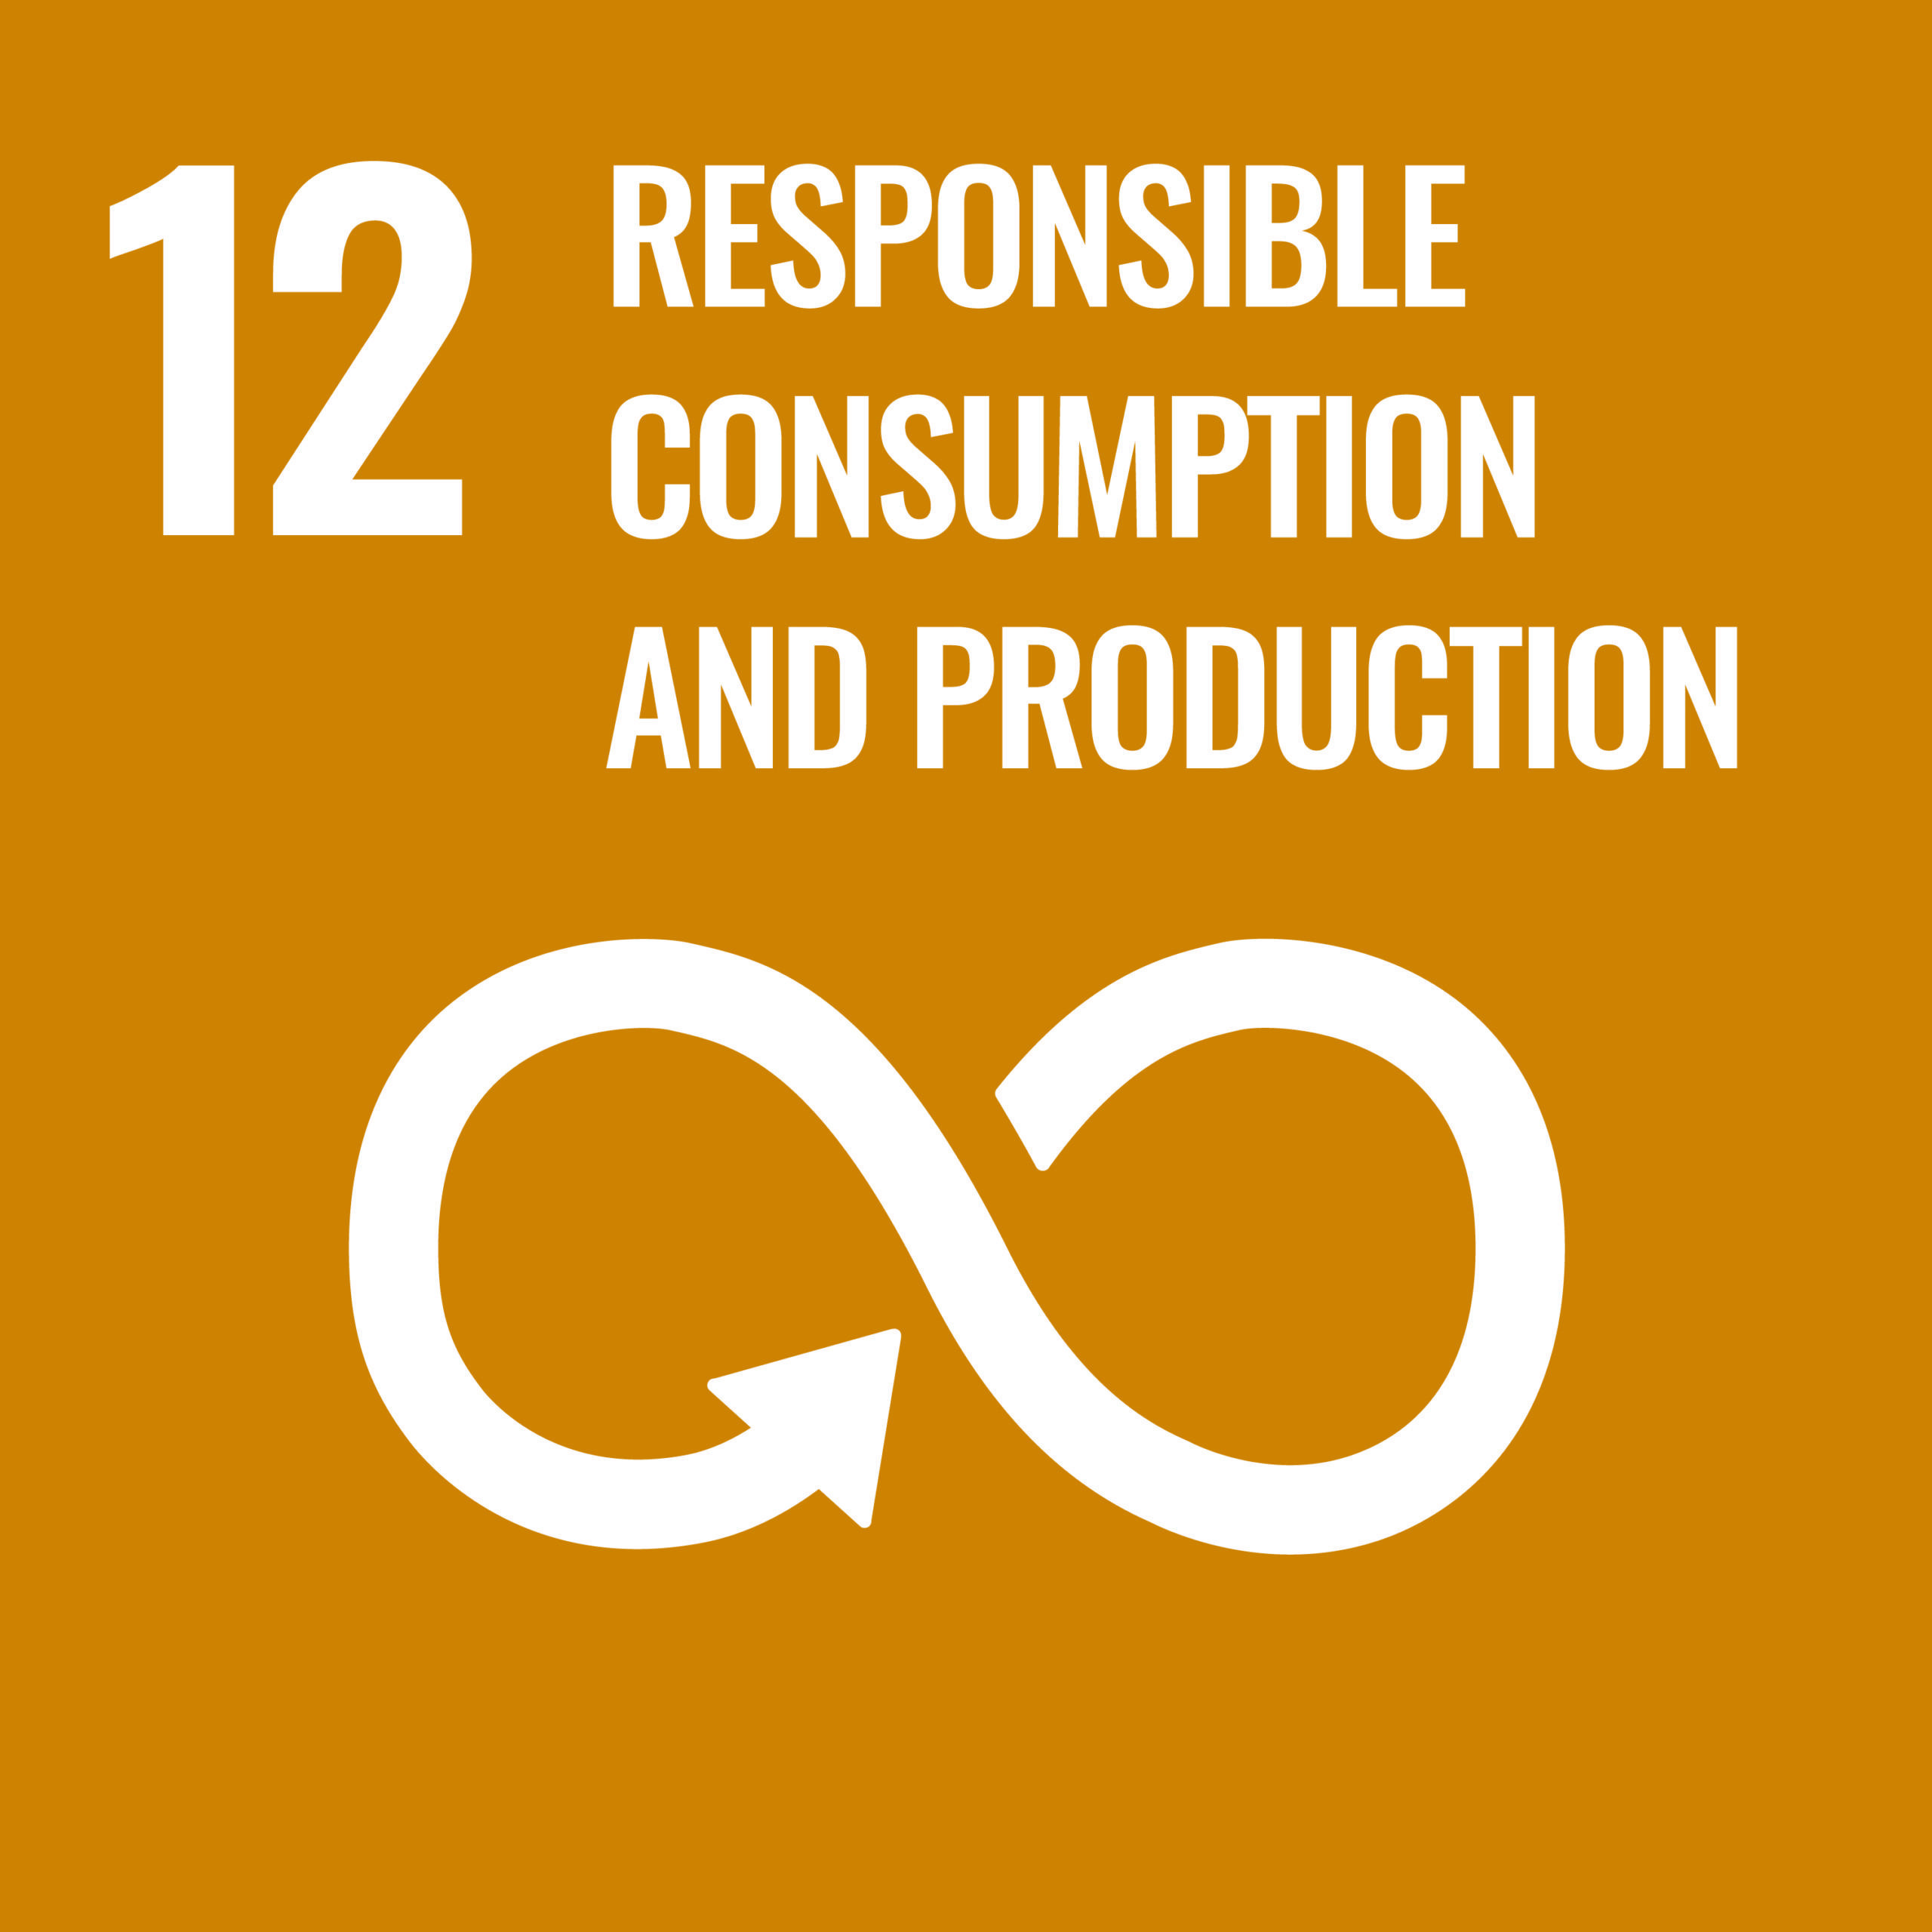 UN Goal 12, responsible consumption